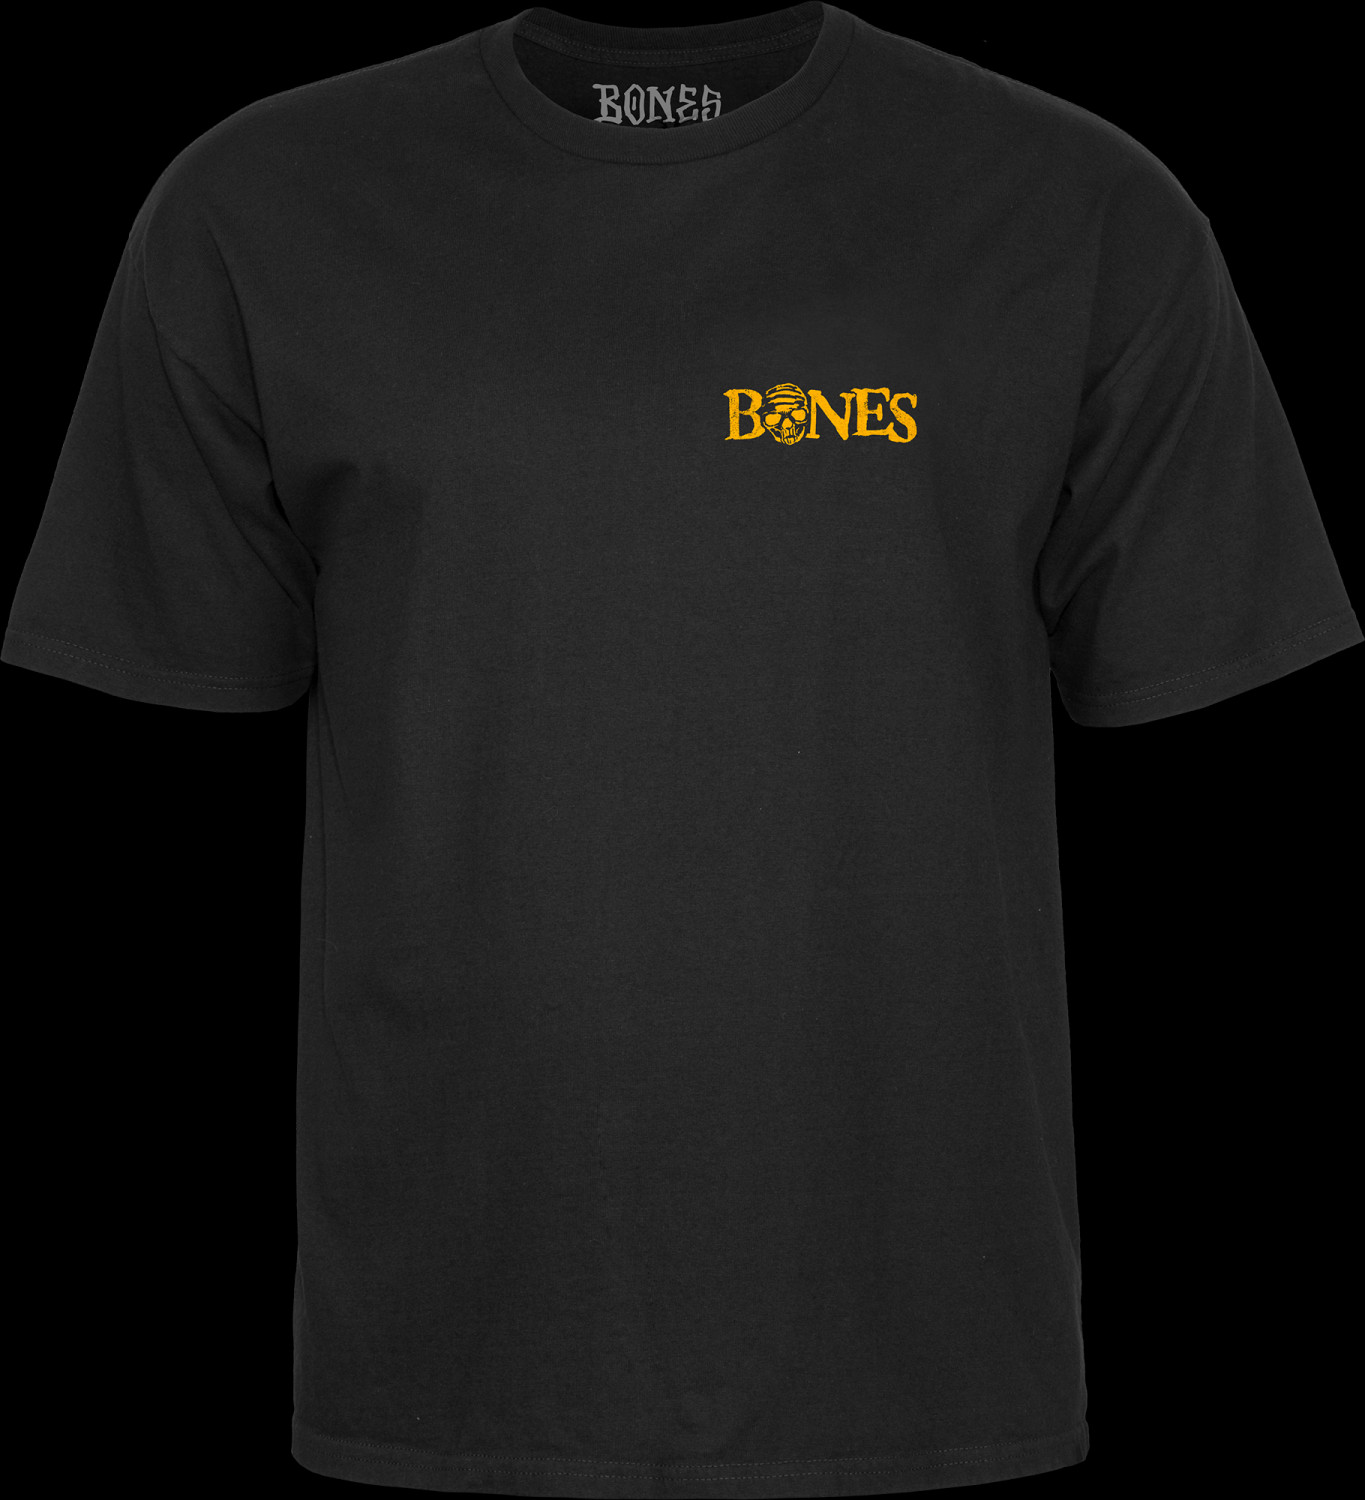 BONES WHEELS T-Shirt Black & Gold - Black Photo #1 - Photo Gallery ...